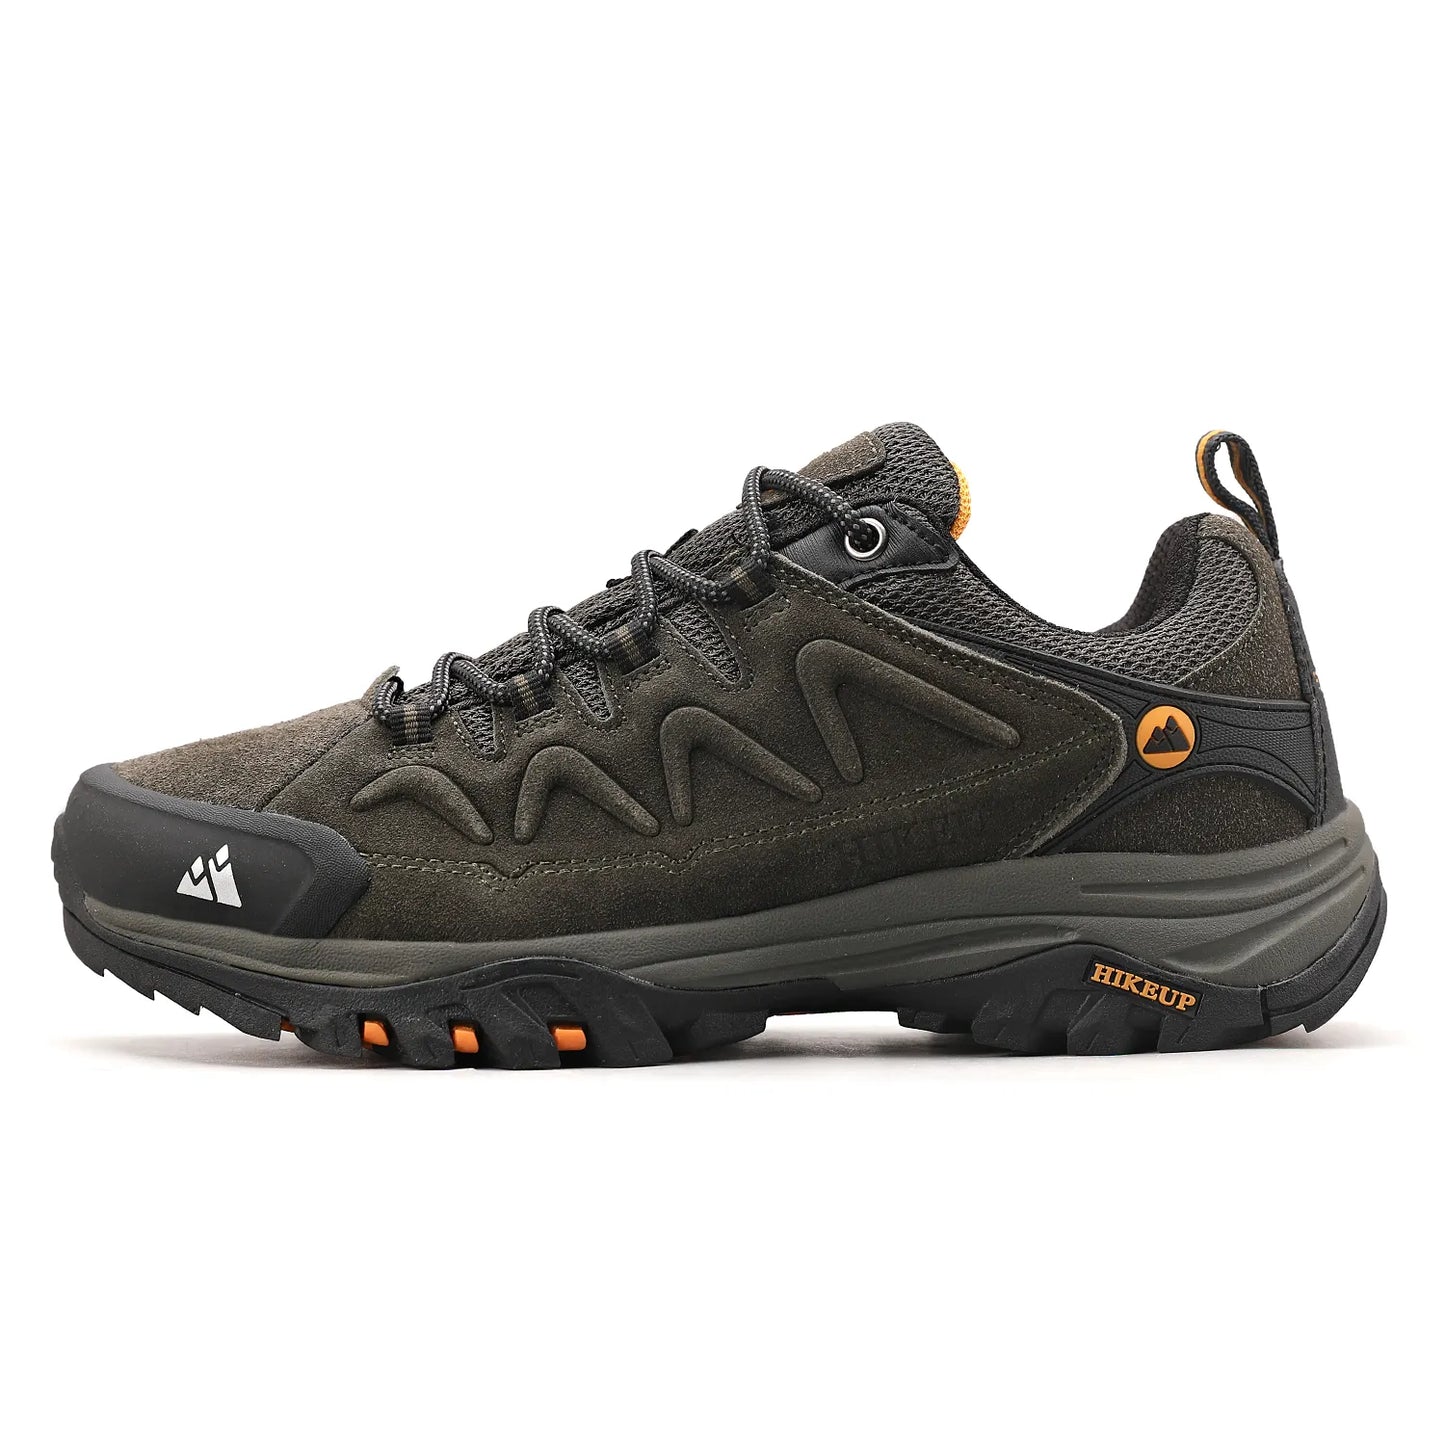 Leather Men‘s Outdoor Hiking Shoes Tourist Trekking Sneakers Mountain Climbing - TaMNz